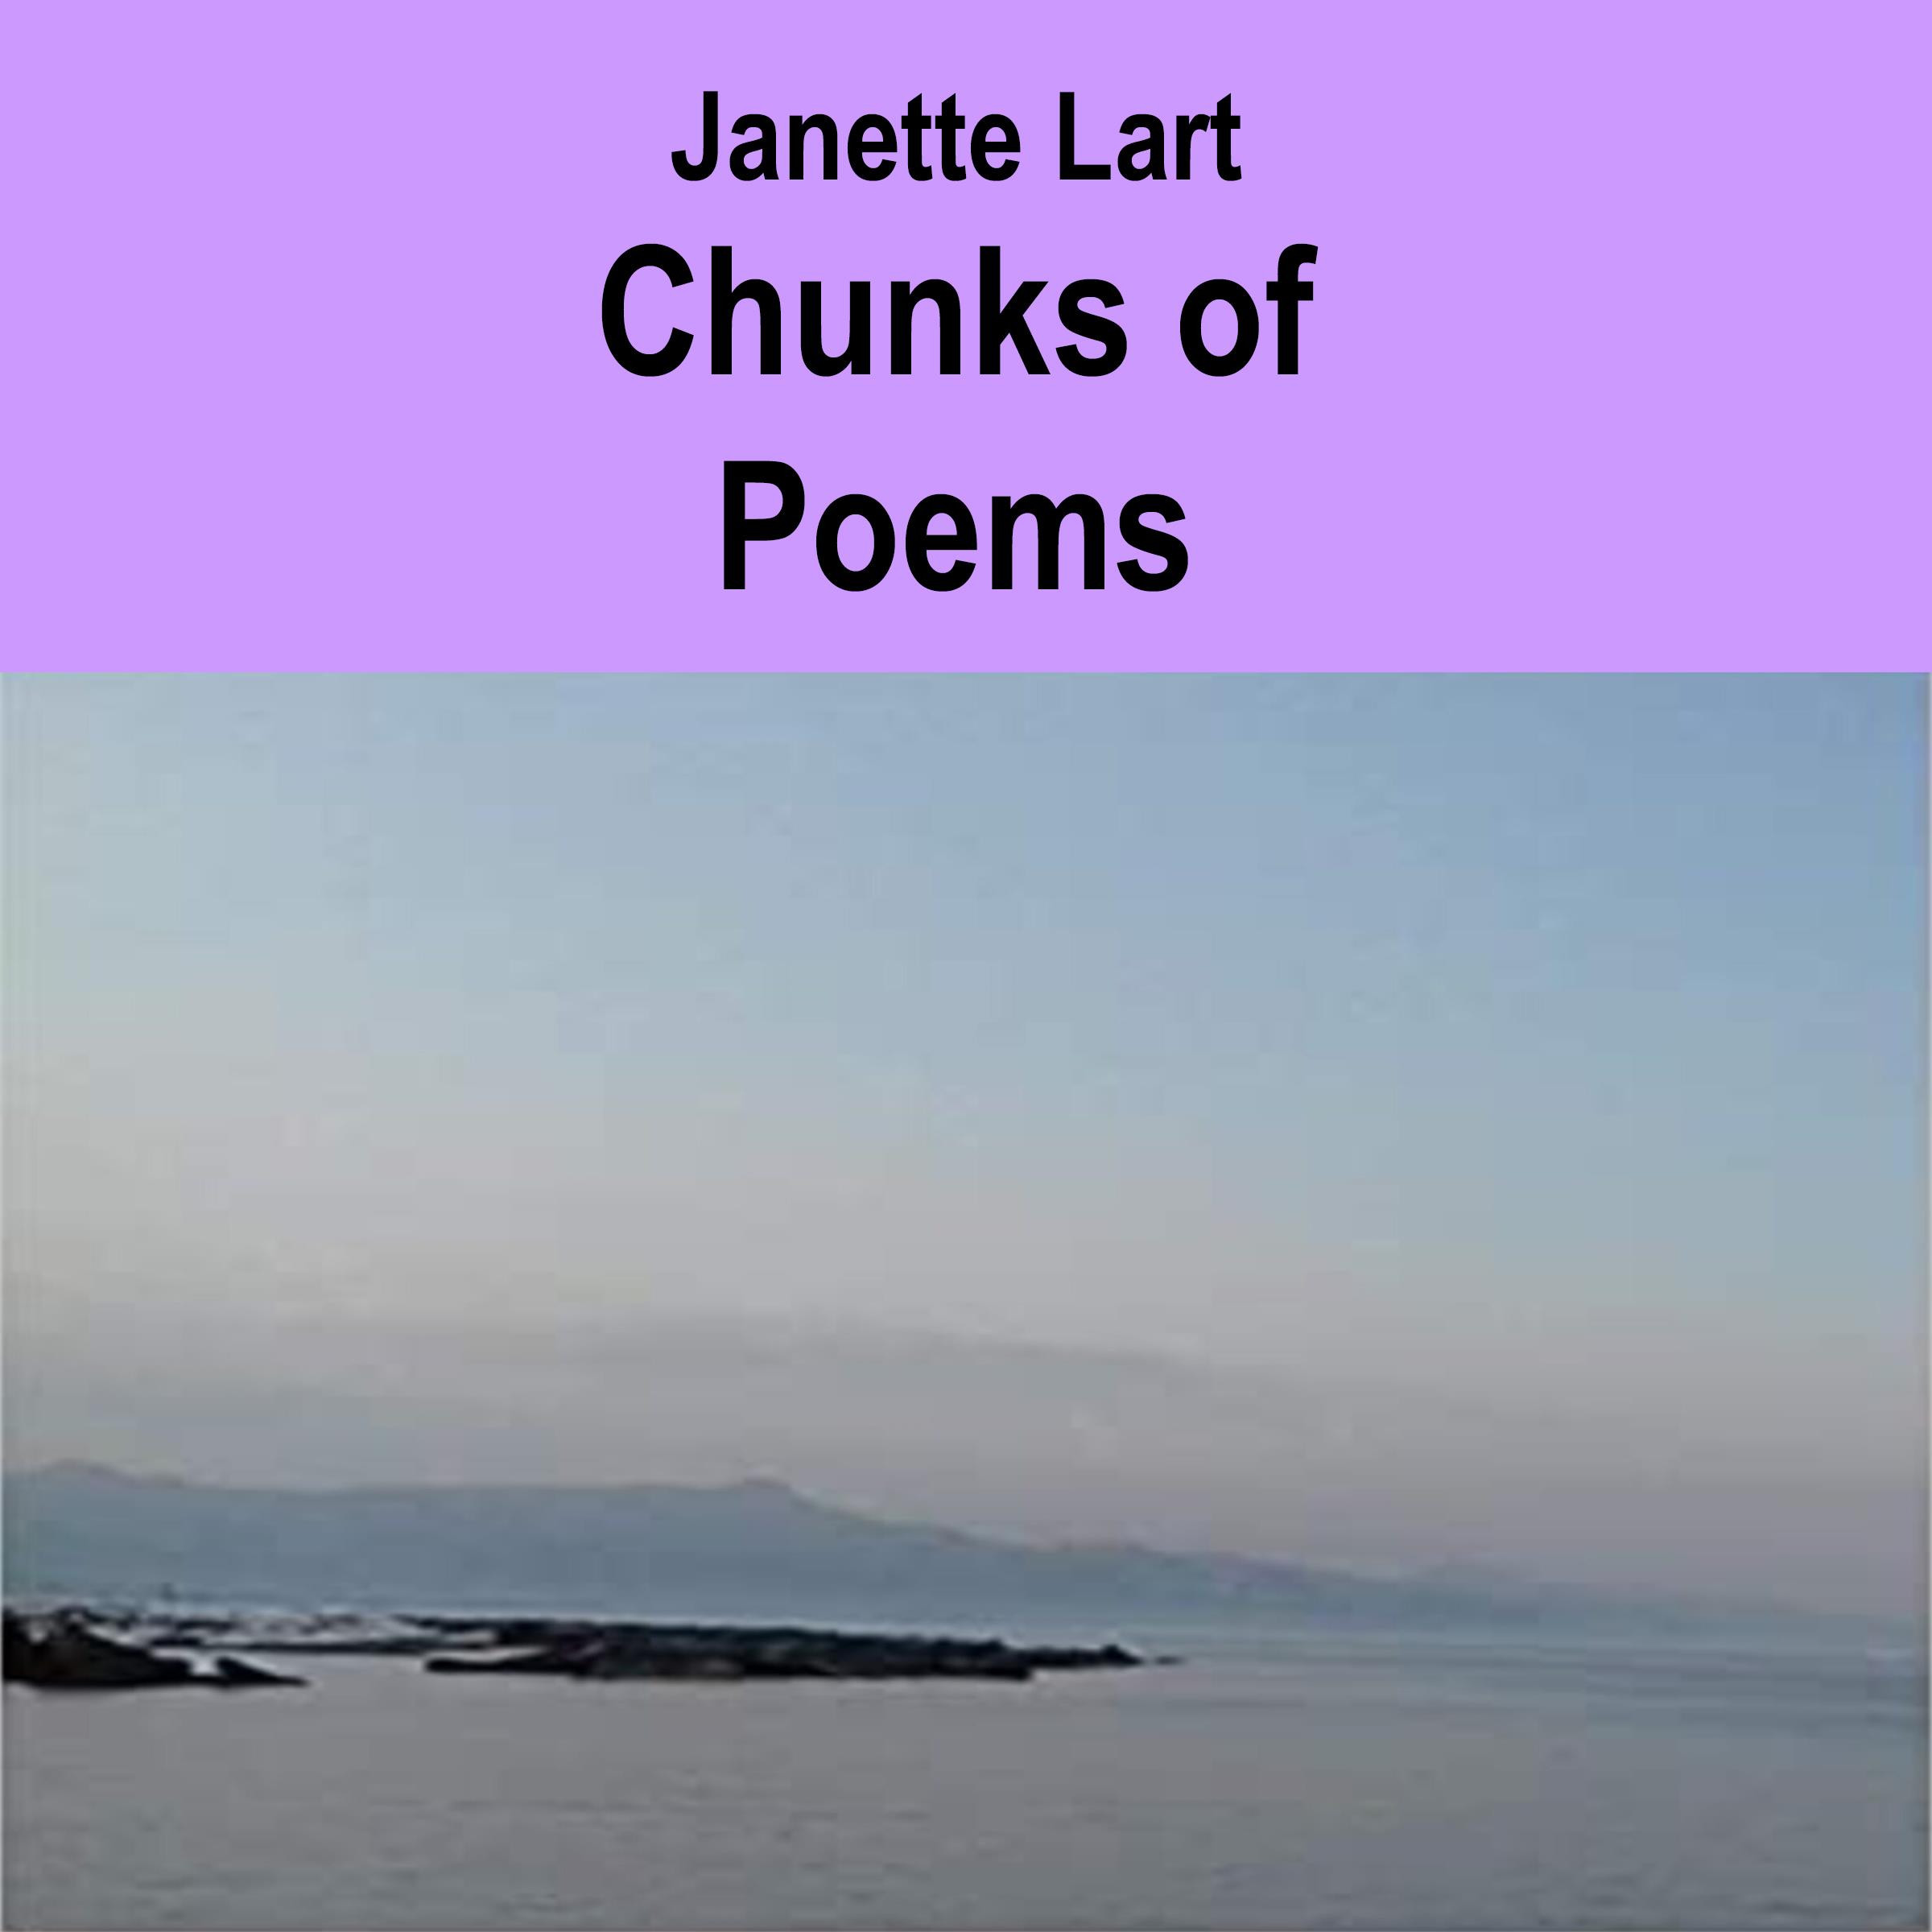 Chunks of Poems